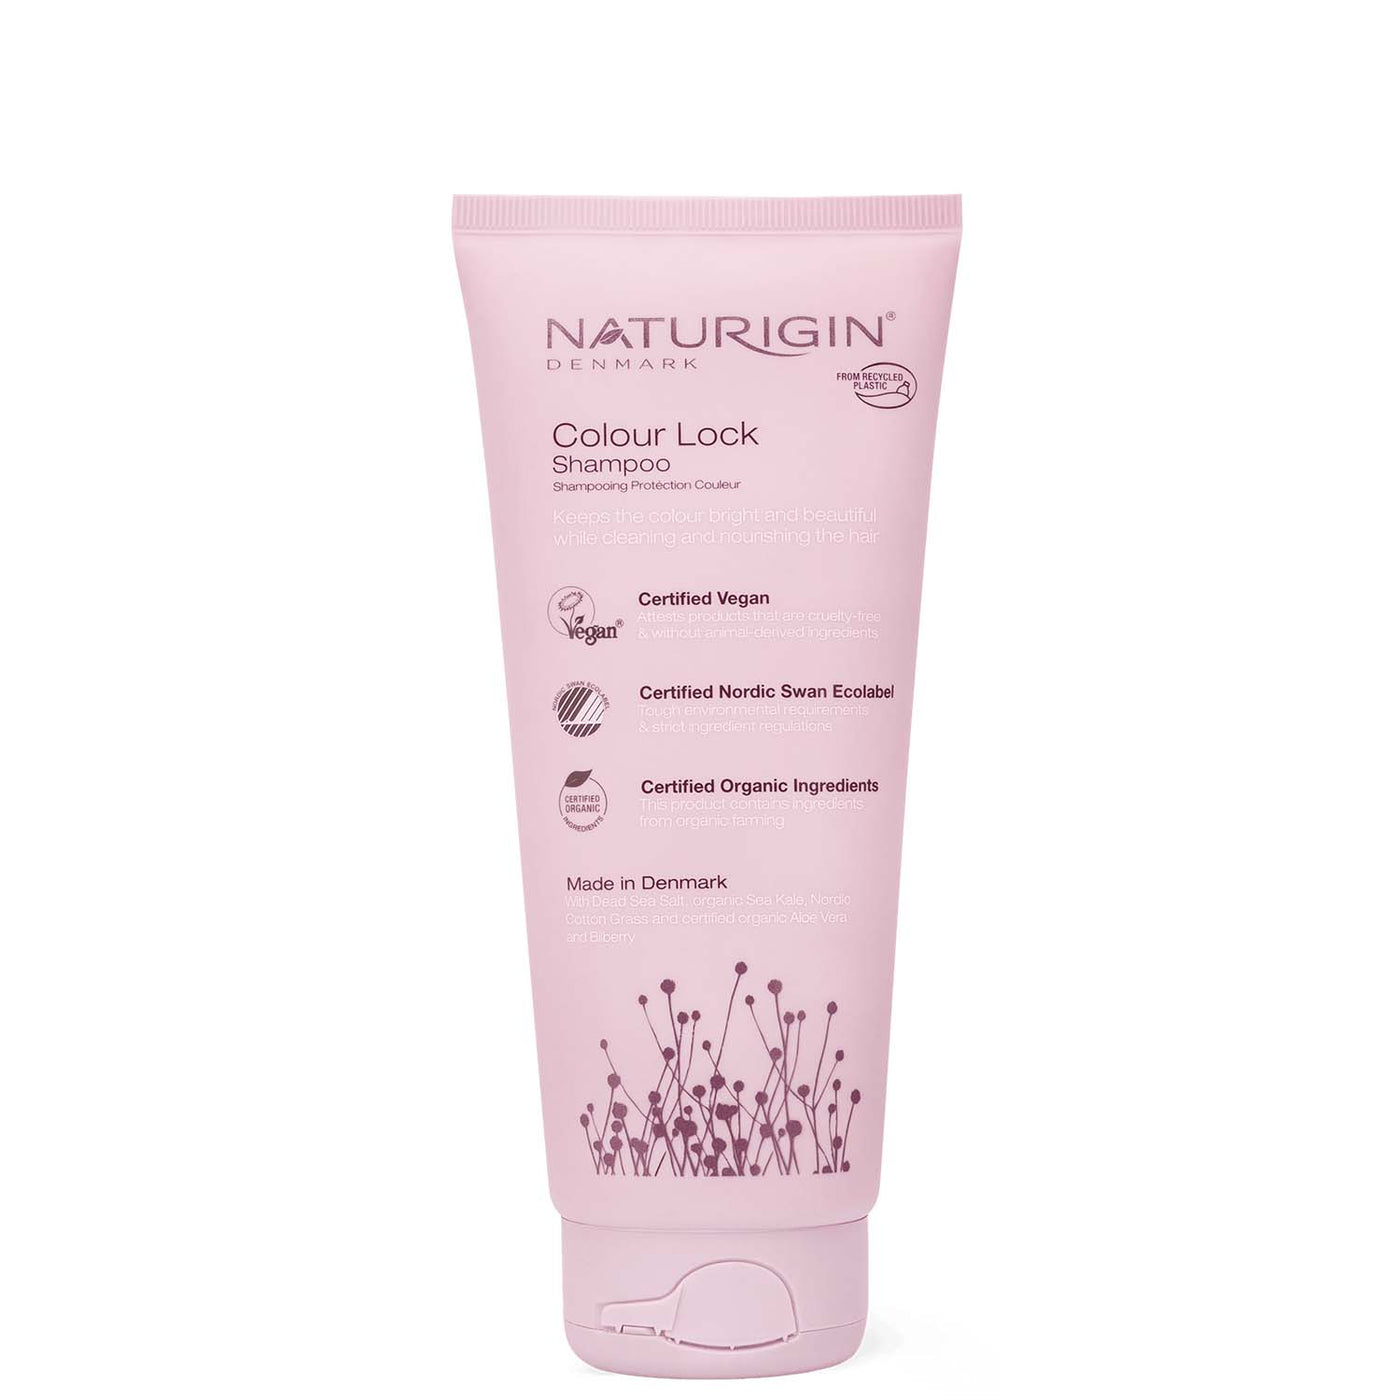 Naturigin Colour Lock Shampoo 200ml